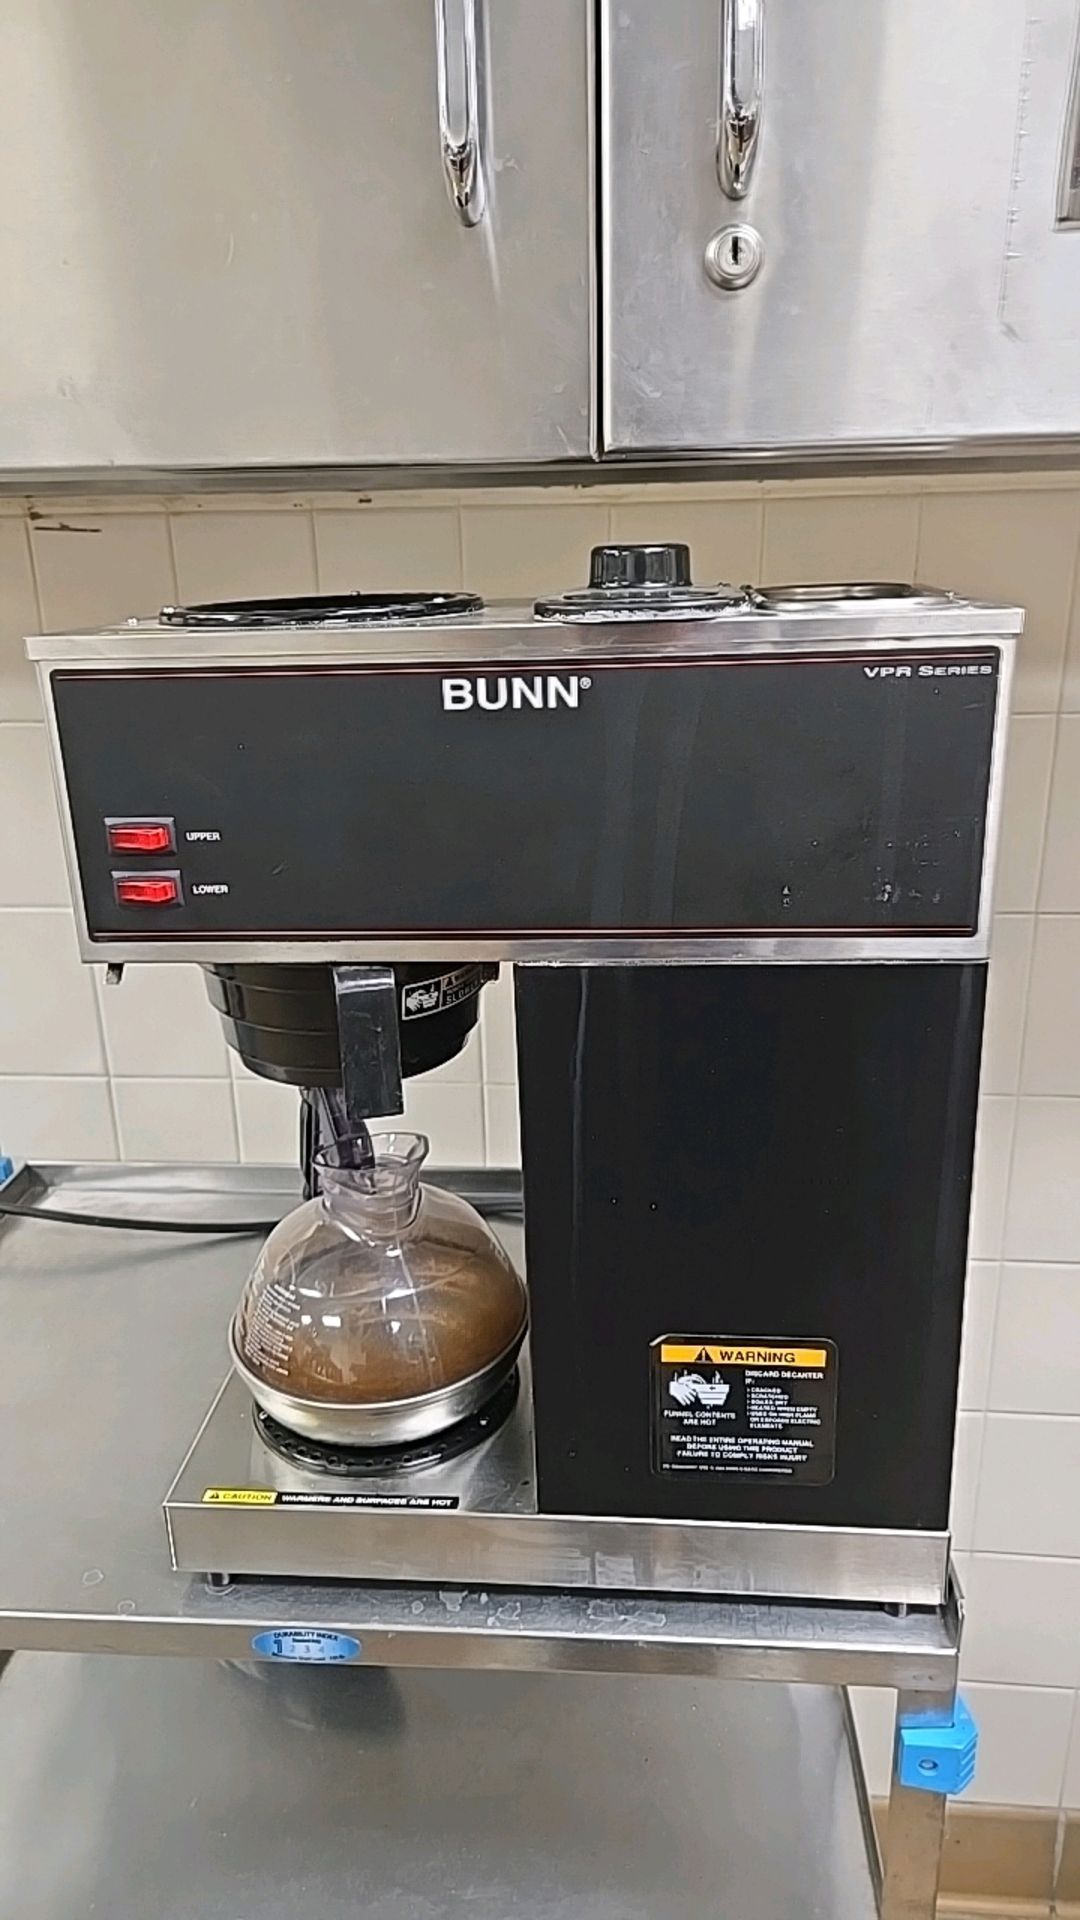 BUNN COFFEE MAKER